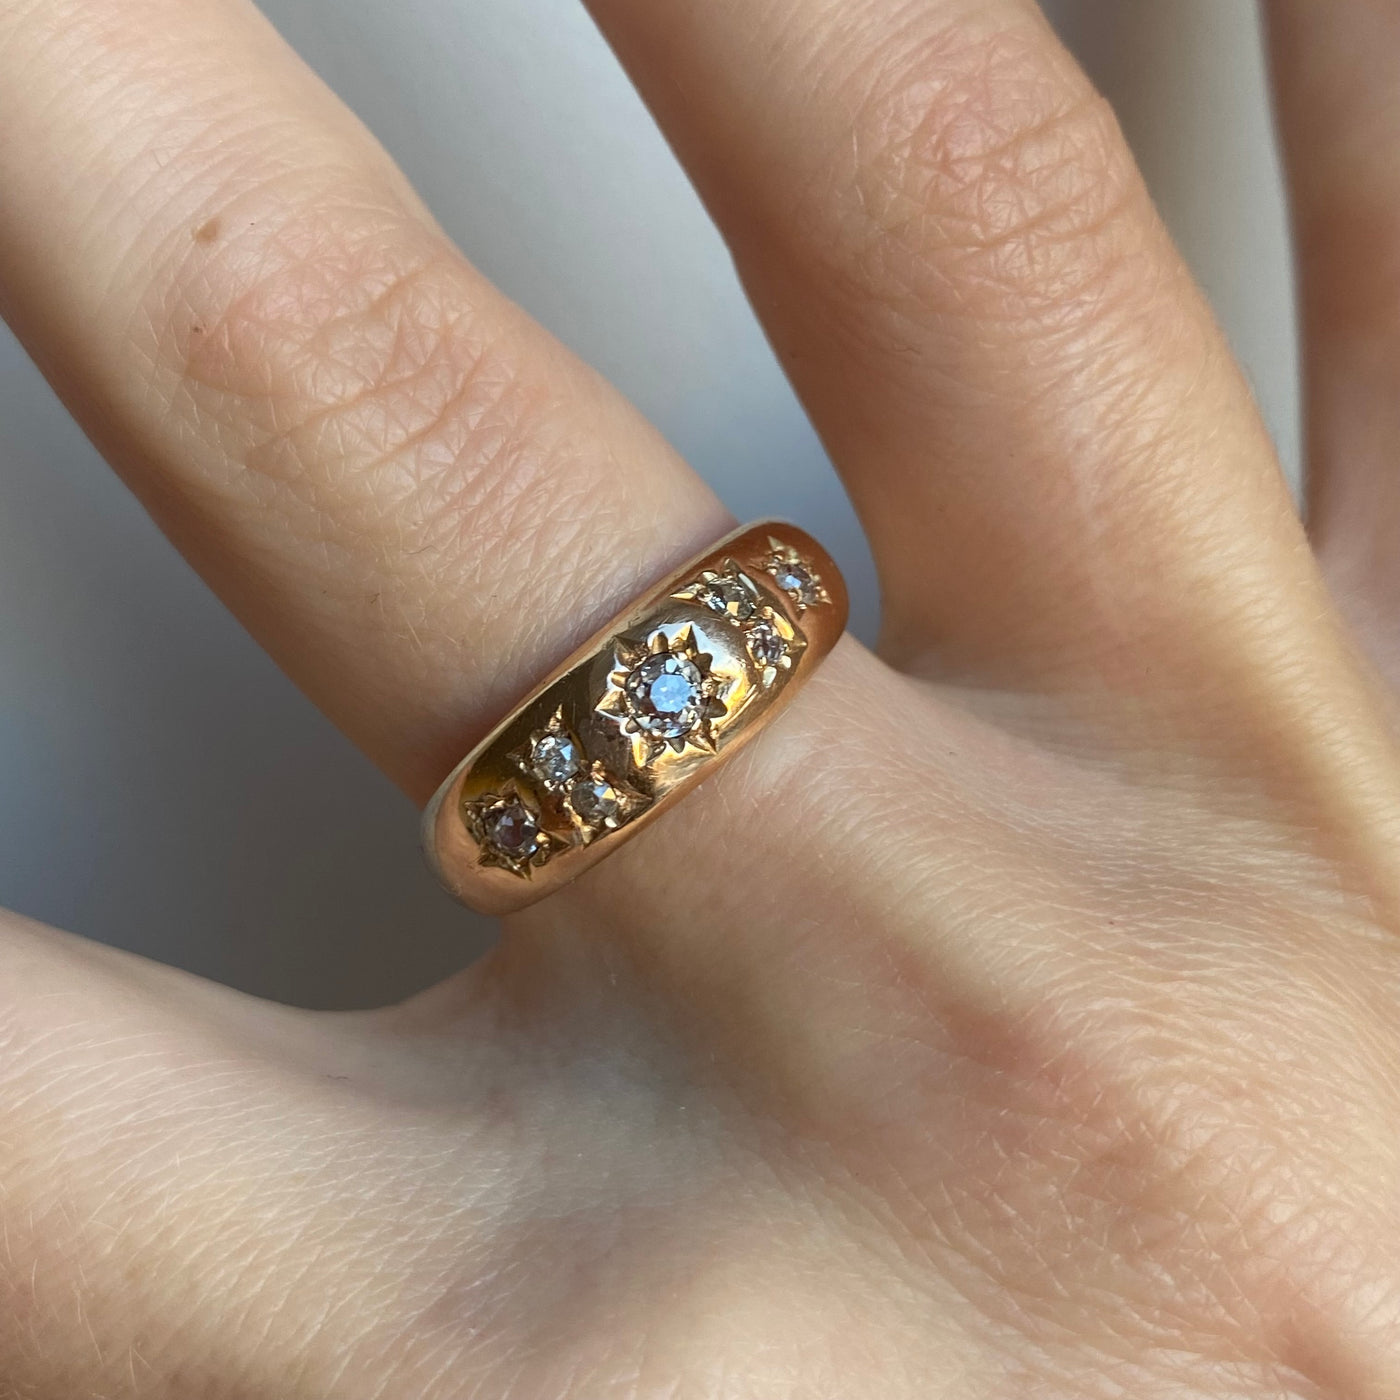 18ct Gold Seven Diamond Starburst Ring